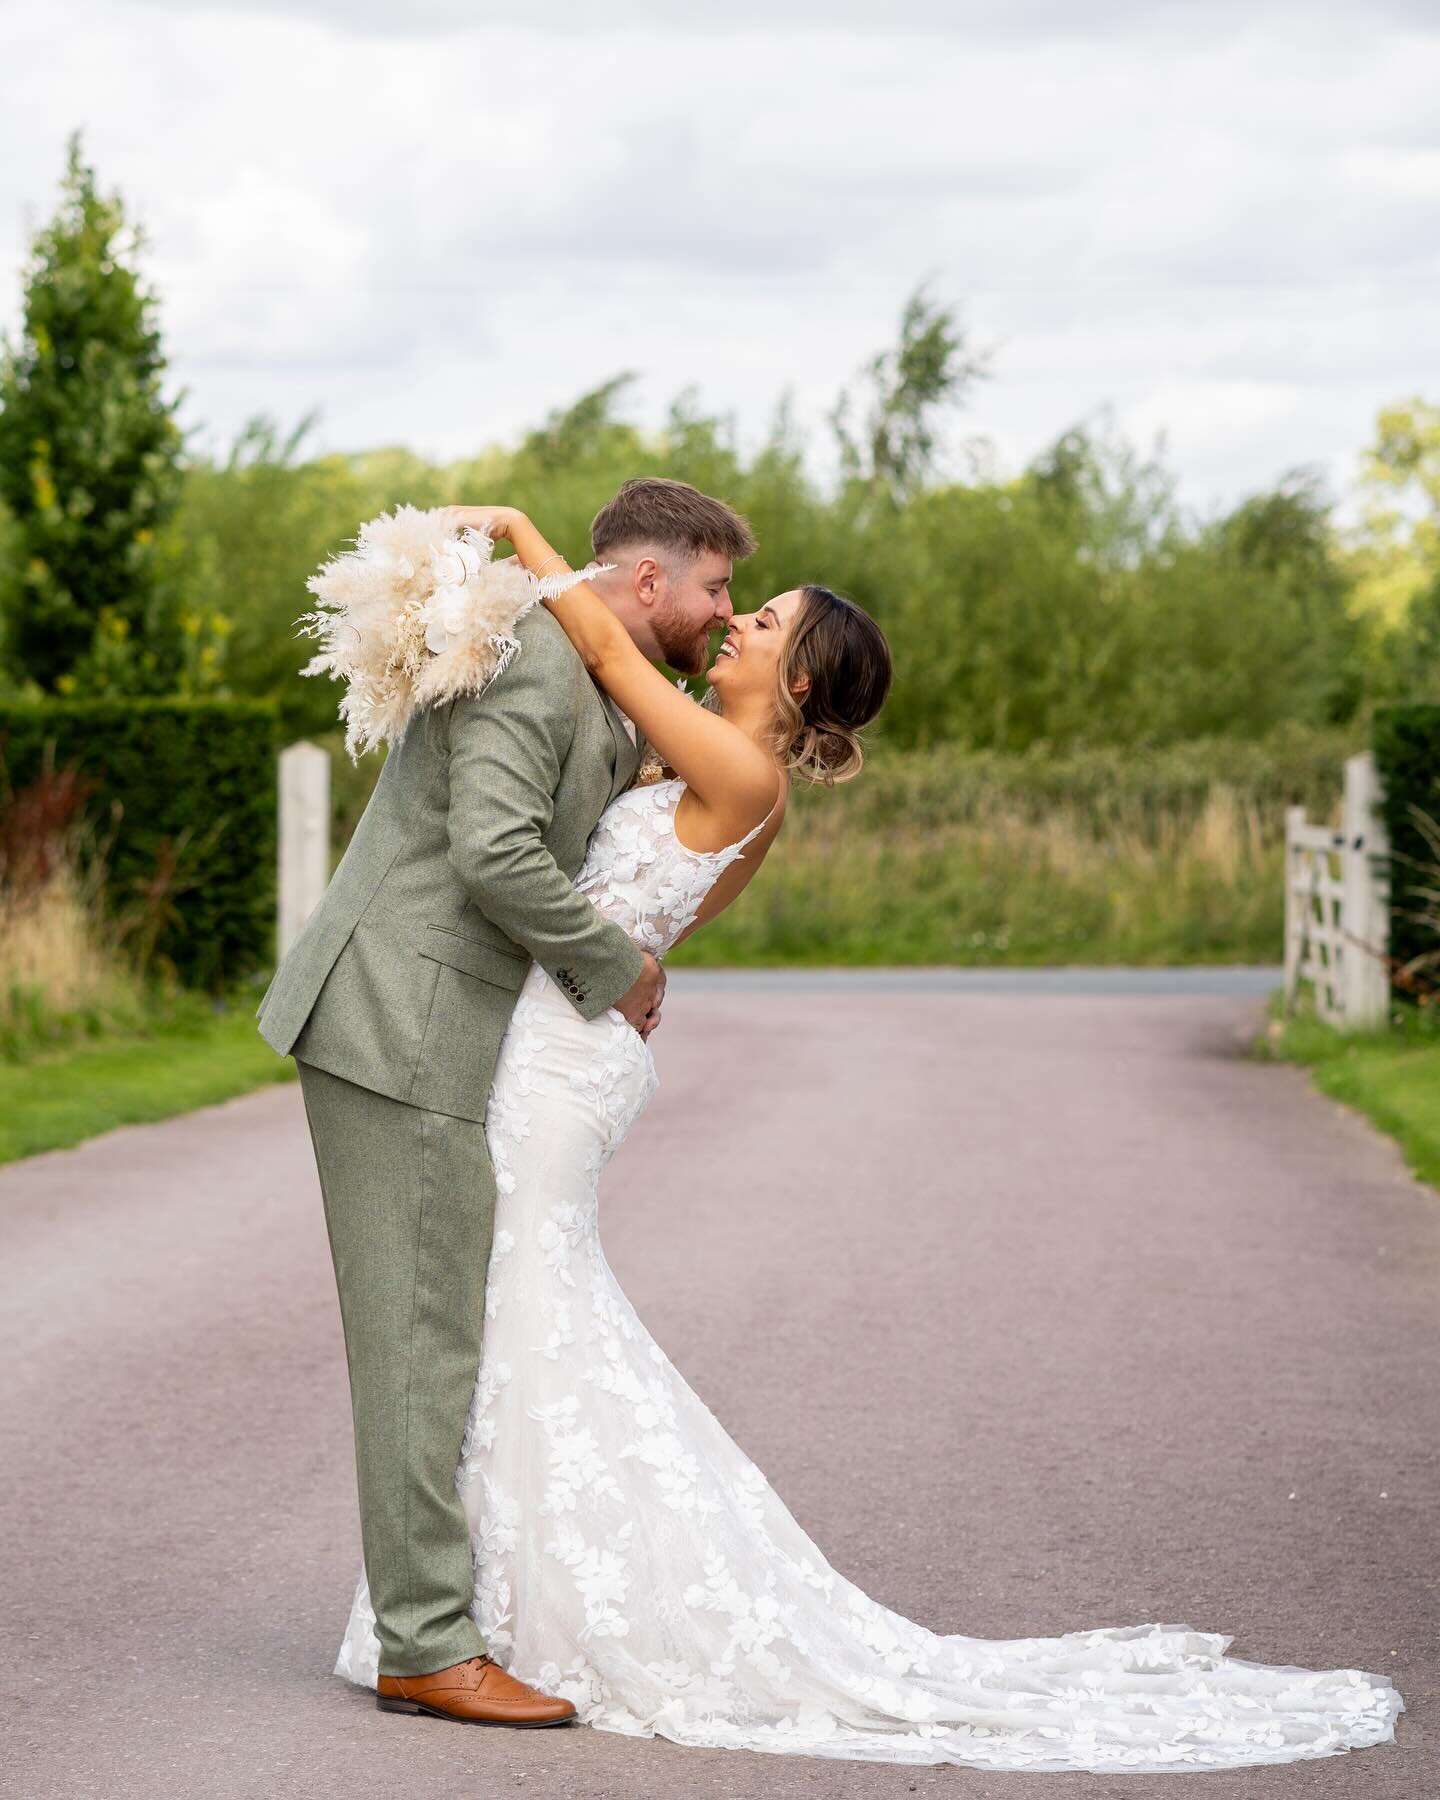 When you marry you&rsquo;re best friend 🥰

www.ctmphotos.co.uk

#weddingdress #weddingday #weddings #love #husbandandwife #brideandgroom #bride #bridal #bridetobe #groom #husband #wife 

#welshwedding #welshweddingphotographer #capturethemoment #wed